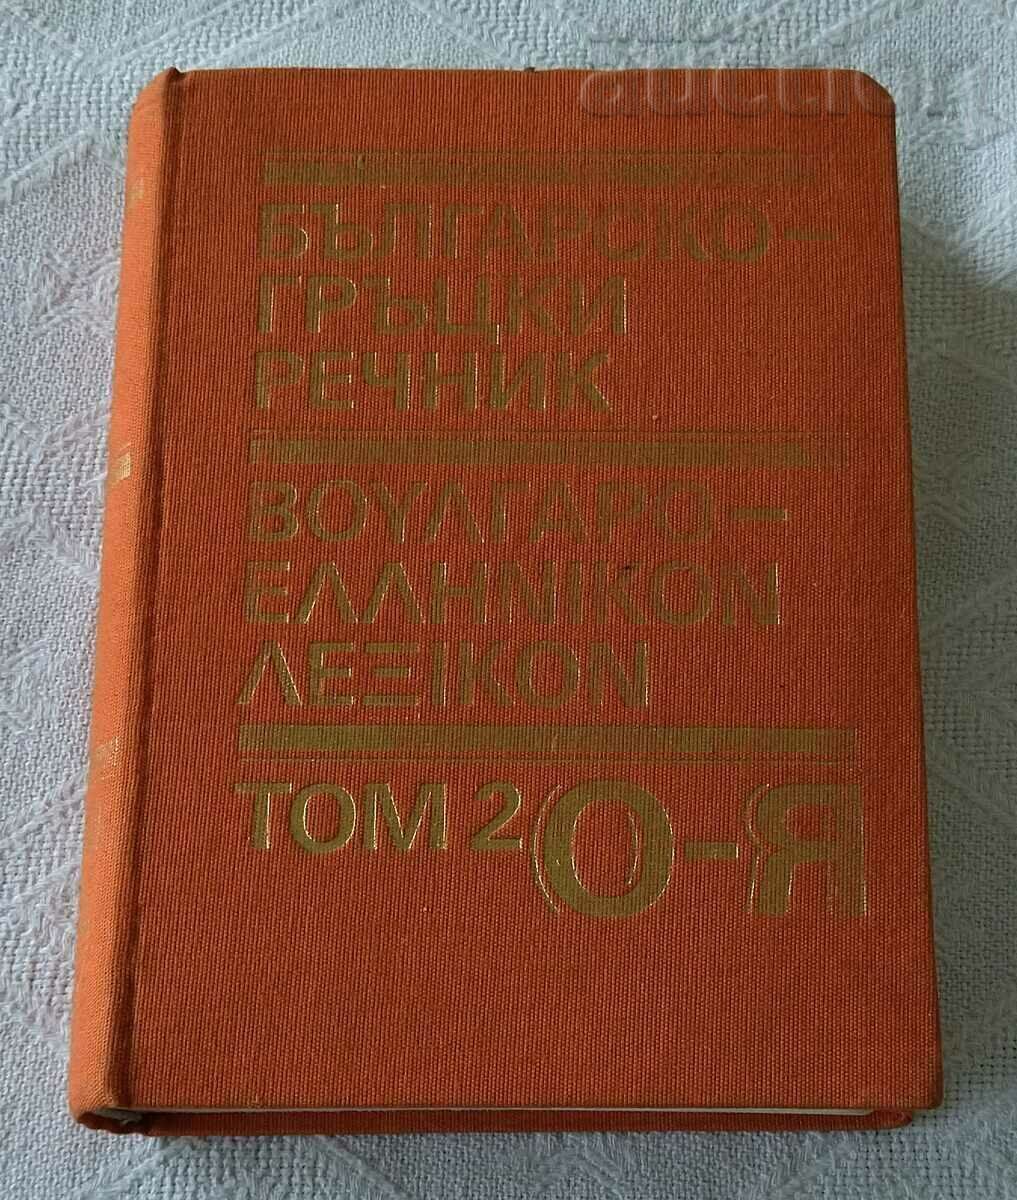 BULGARIAN-GREEK DICTIONARY 1991 VOLUME 2